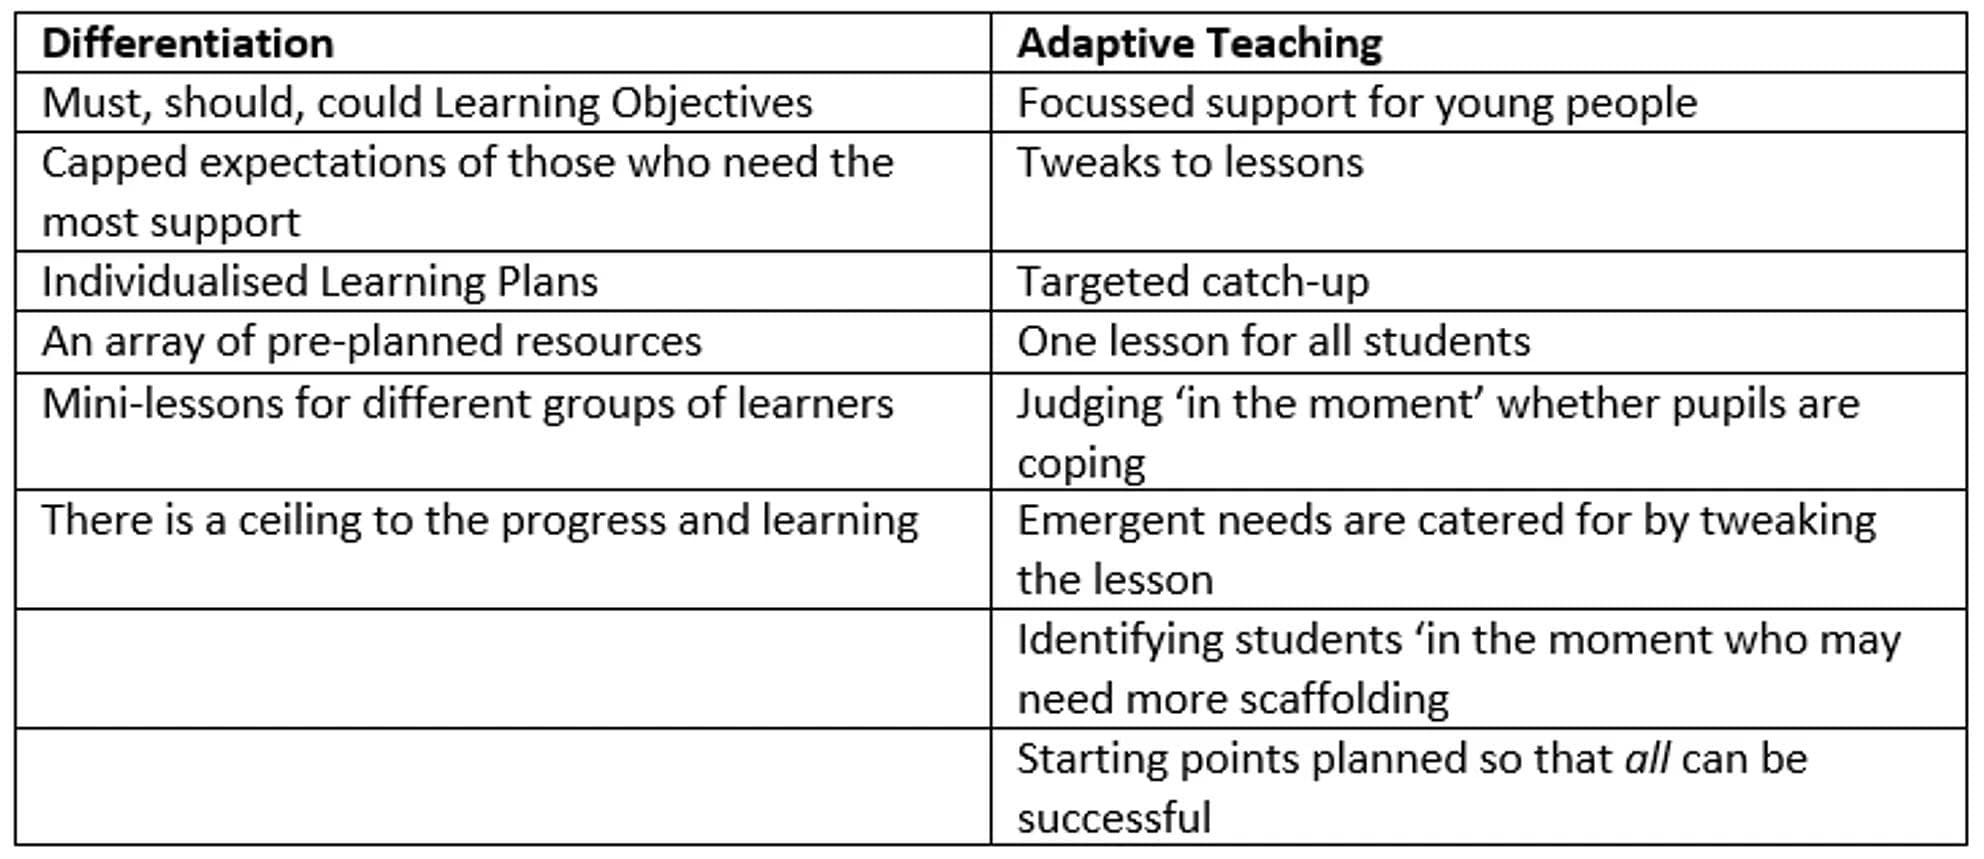 Adaptive Teaching Vs Differentiation